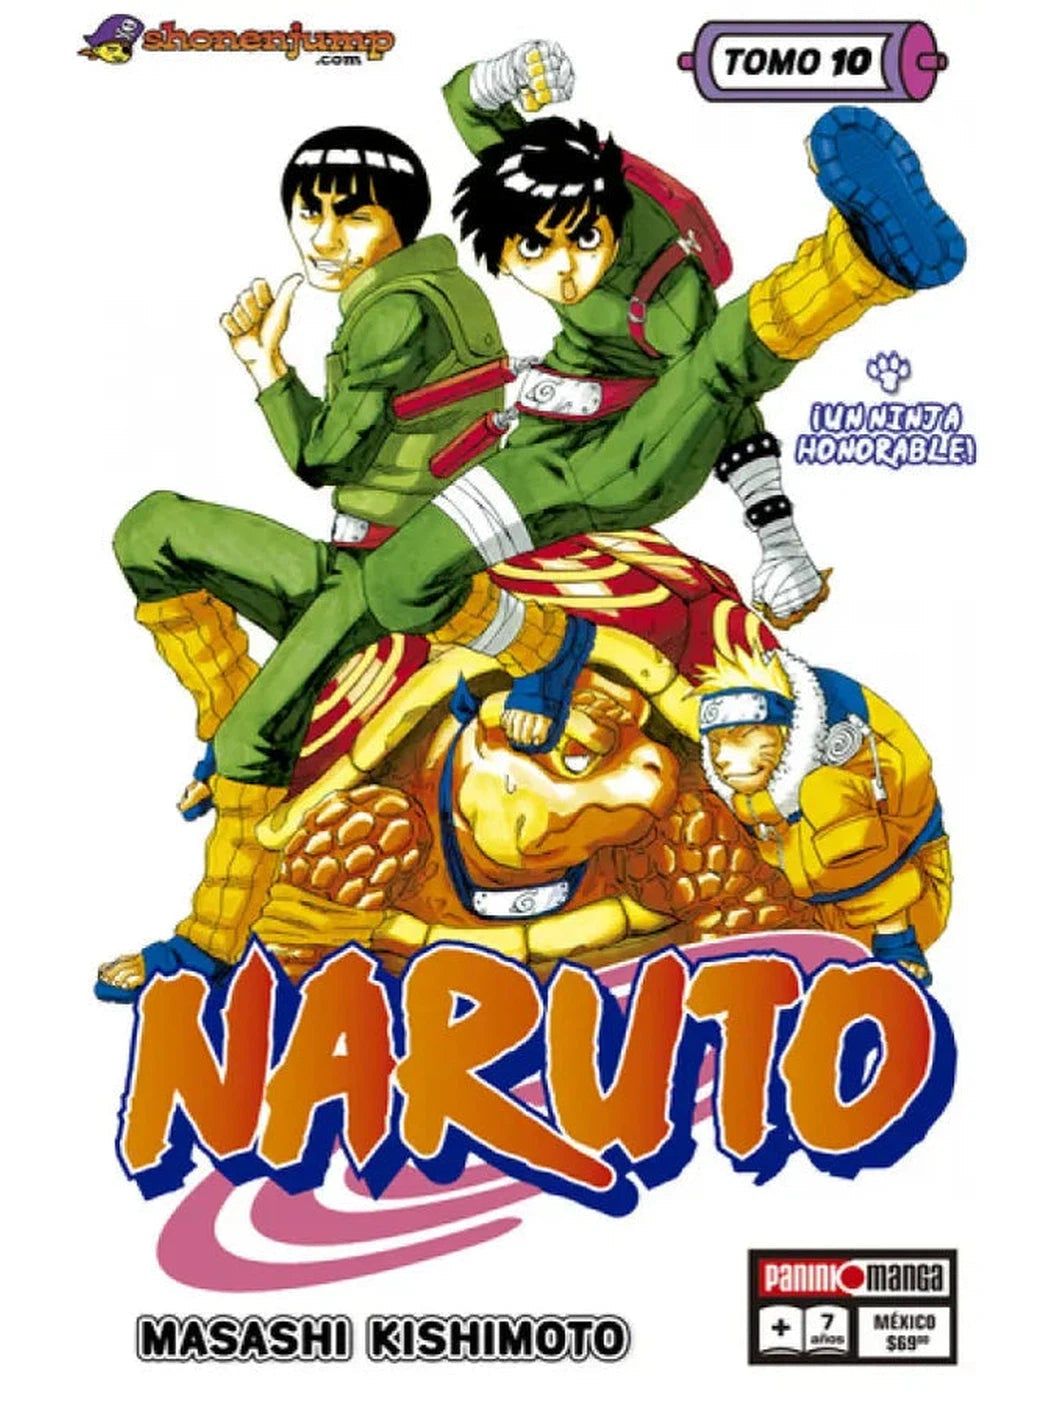 Naruto - #10 Panini Argentina ENcuadrocomics